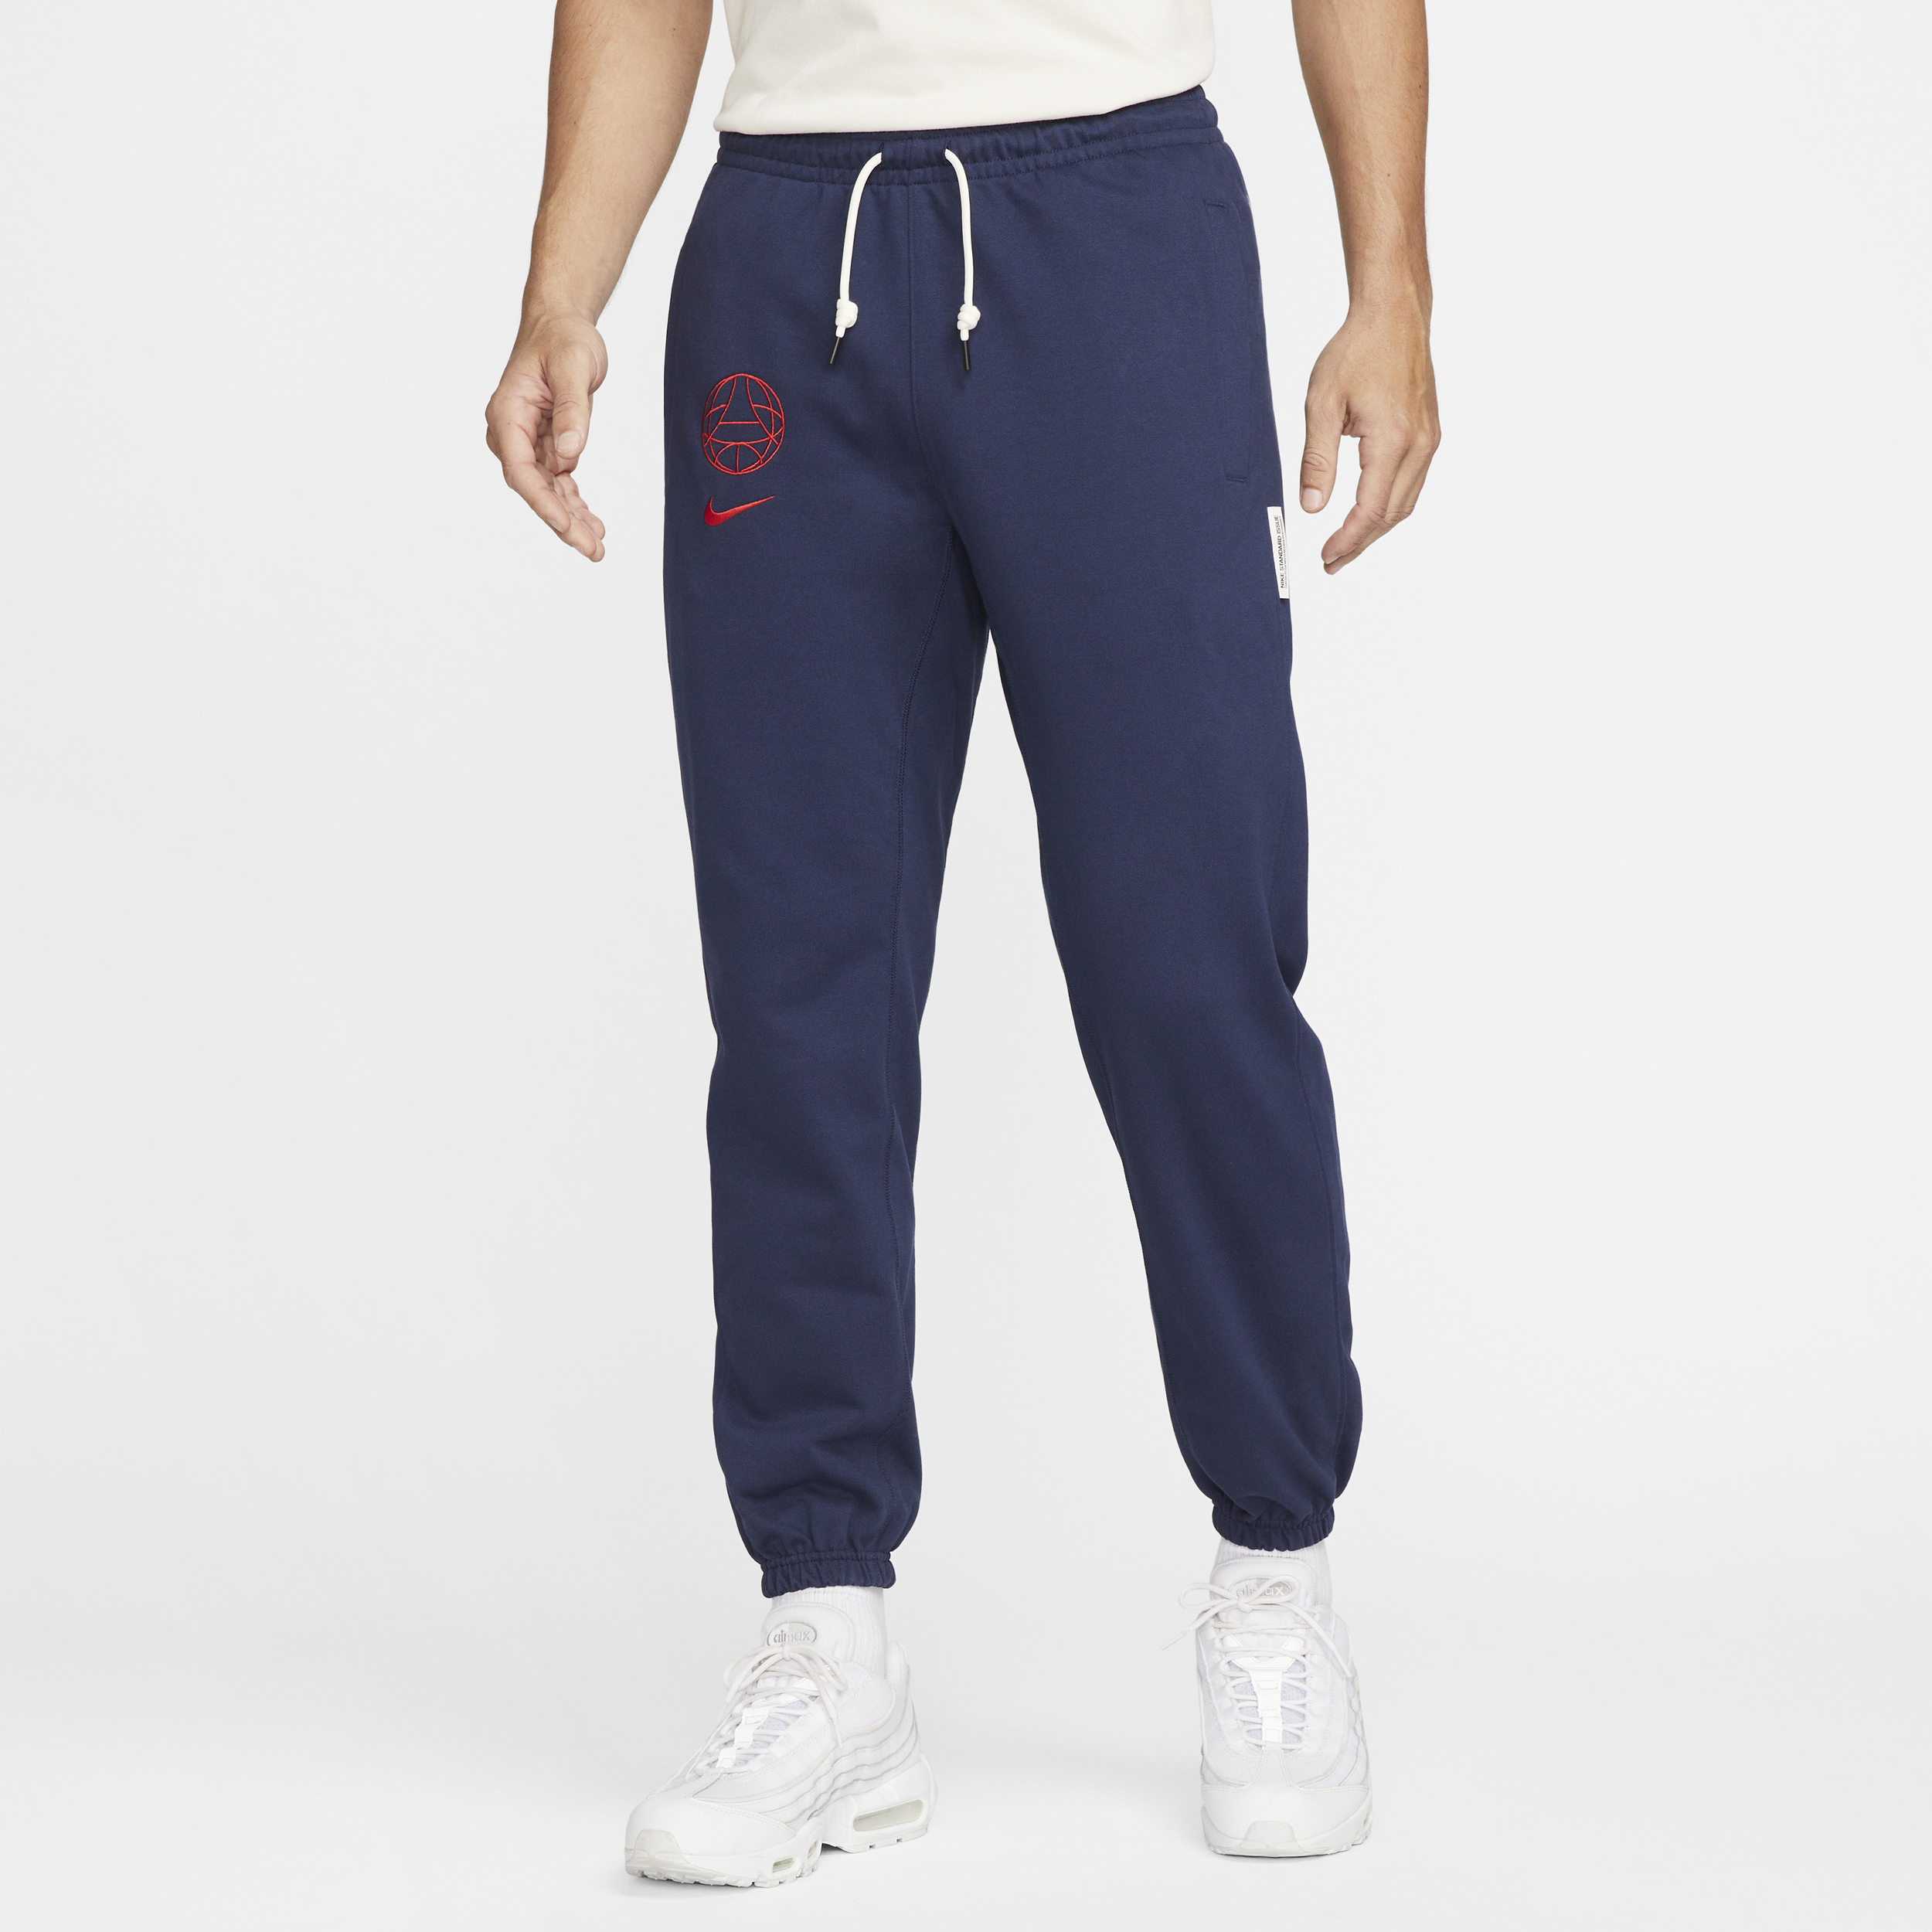 París Saint-Germain Standard Issue Pantalón de fútbol Nike - Hombre - Azul